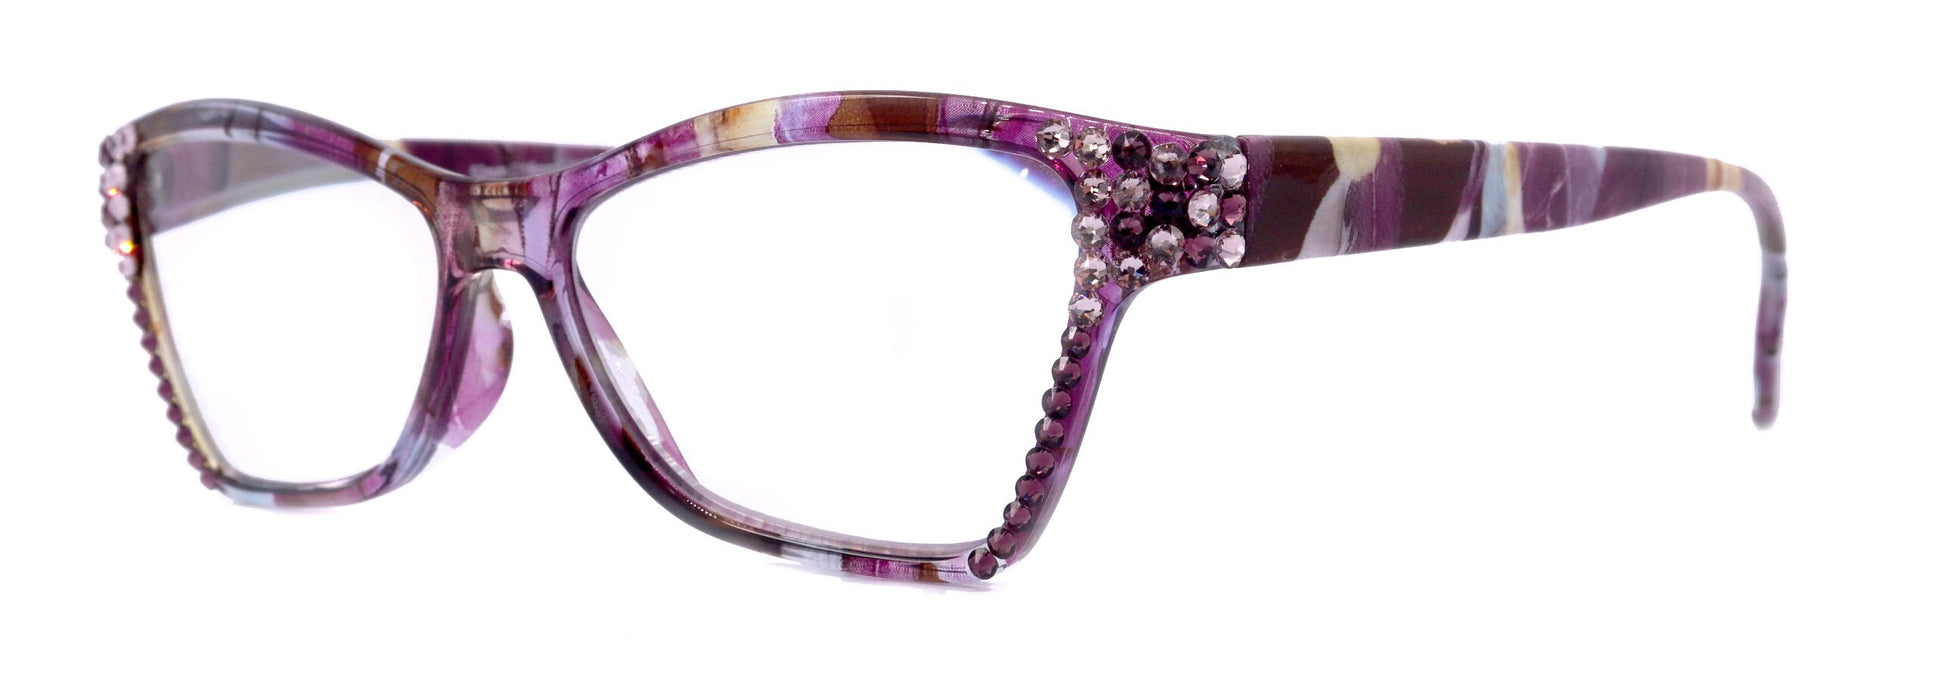 Avian, (Bling) Women Reading Glasses w (Amethyst, L. Amethyst) Genuine European Crystals, Magnifying Cat Eye (Purple) NY Fifth Avenue